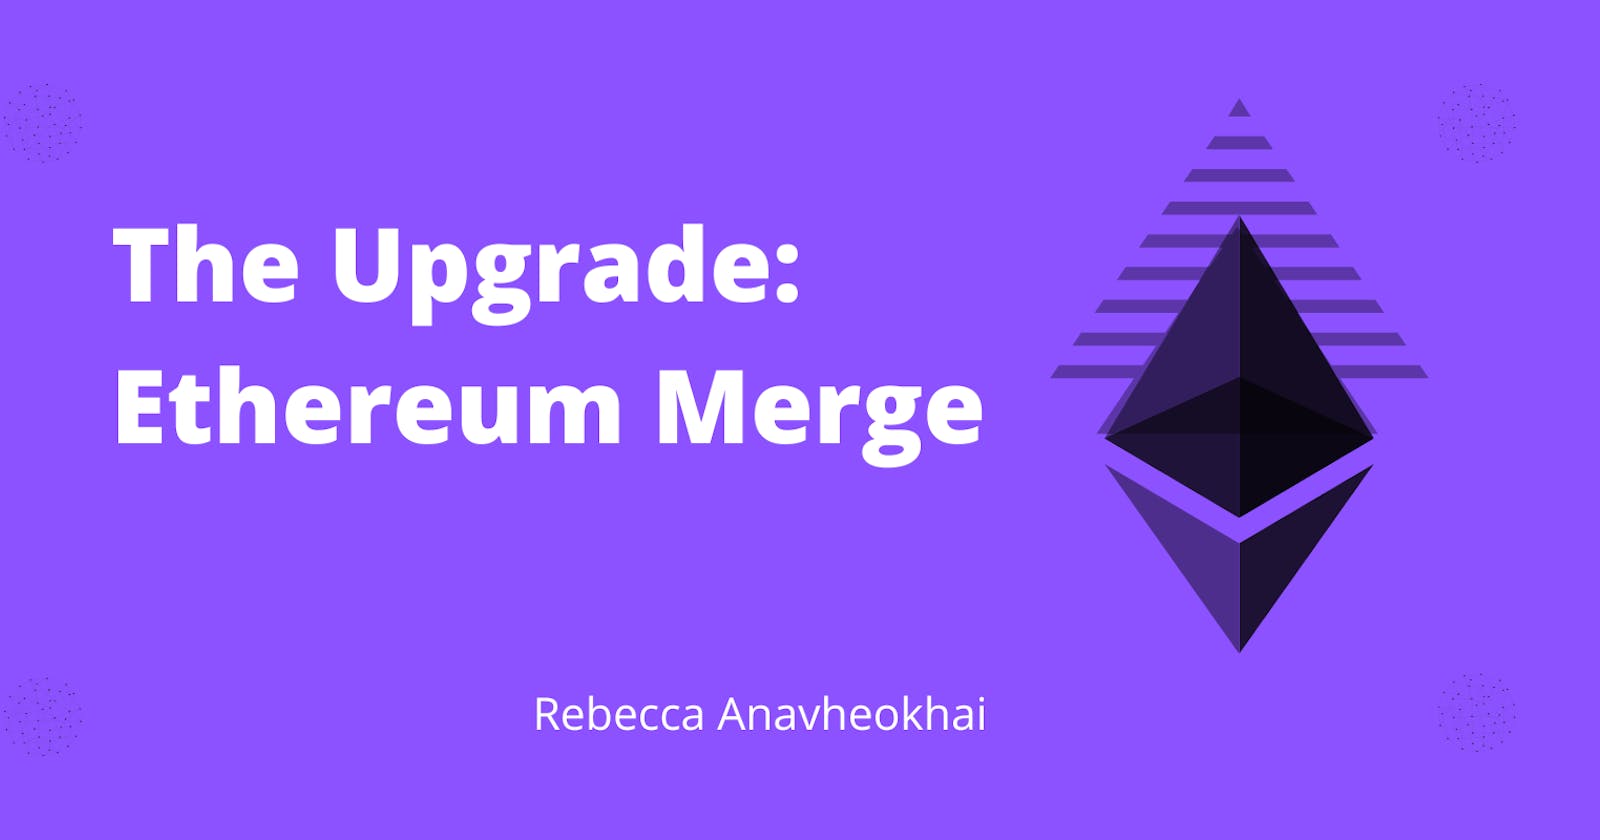 The Upgrade: Ethereum Merge.